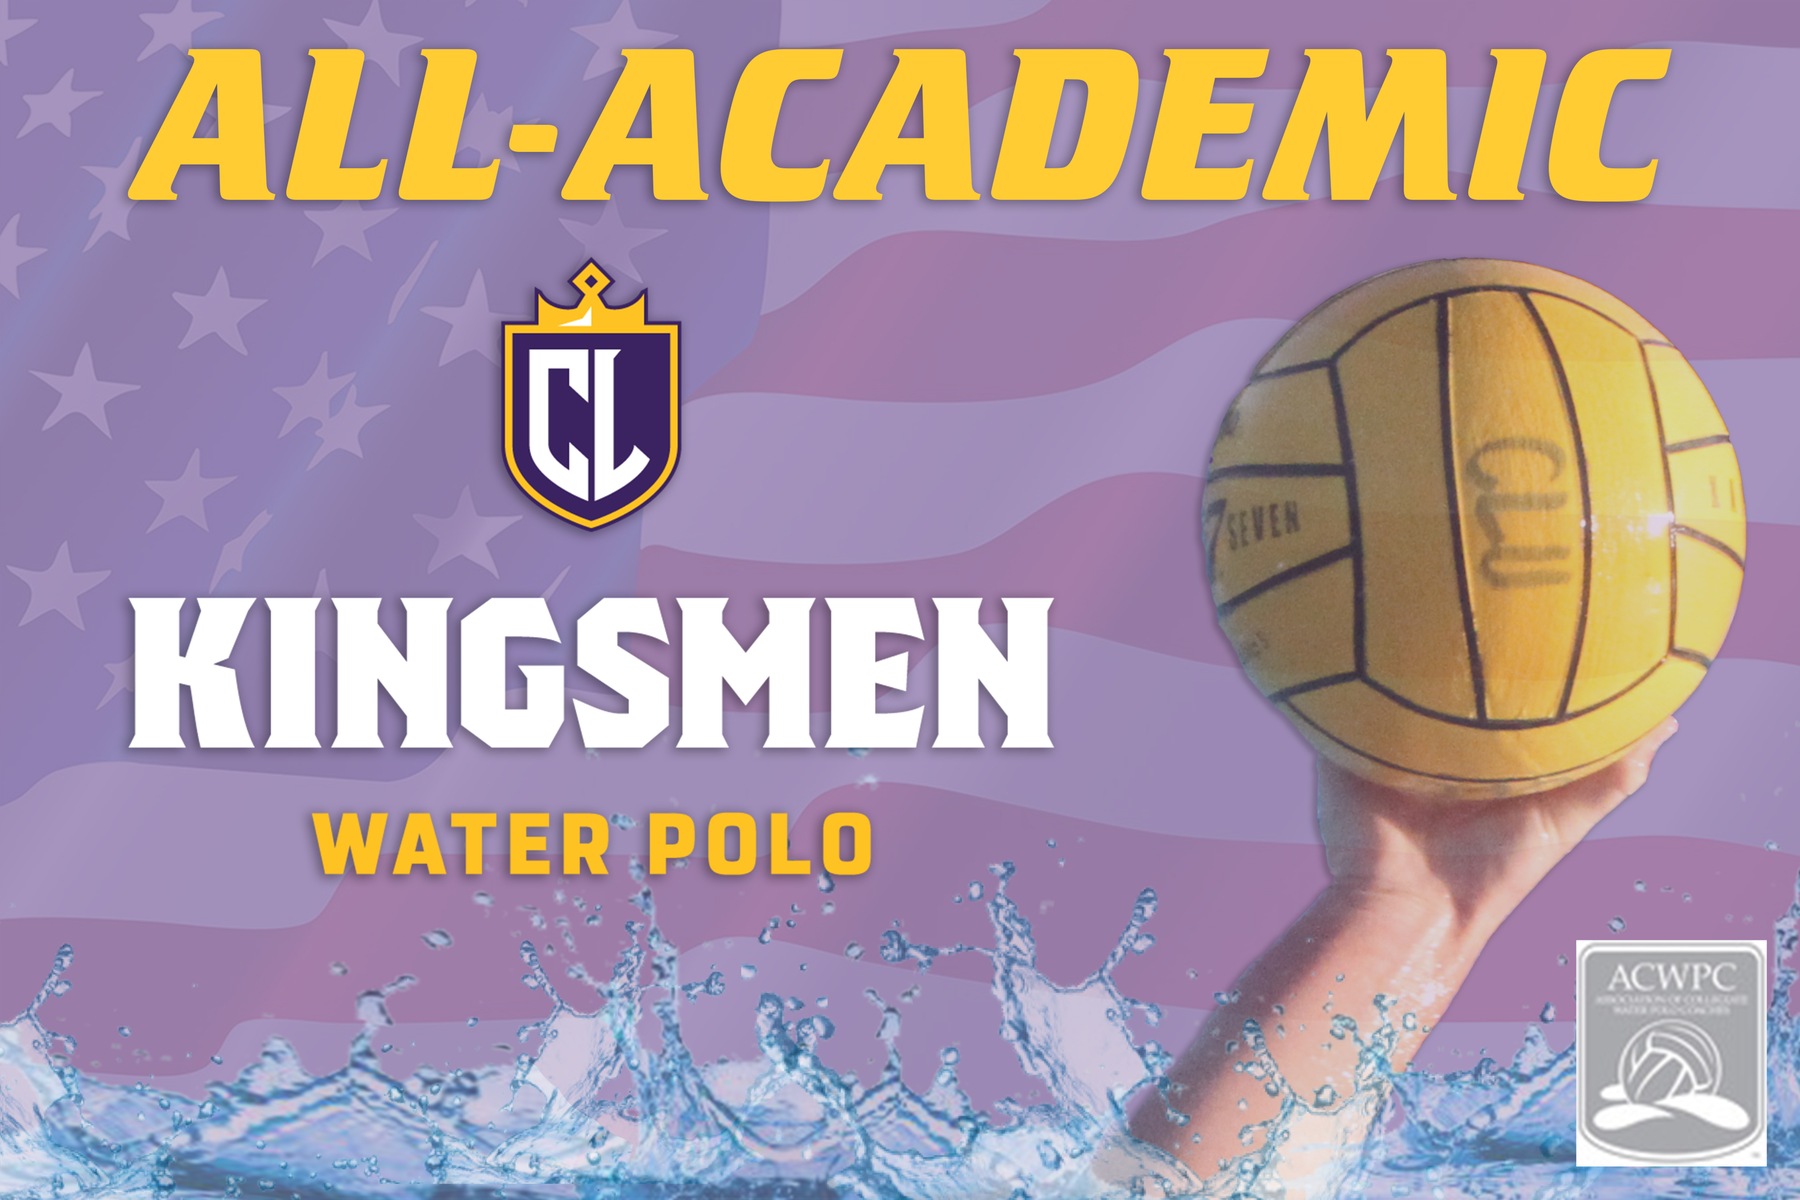 Kingsmen Water Polo Earns ACWPC All-Academic Team Award